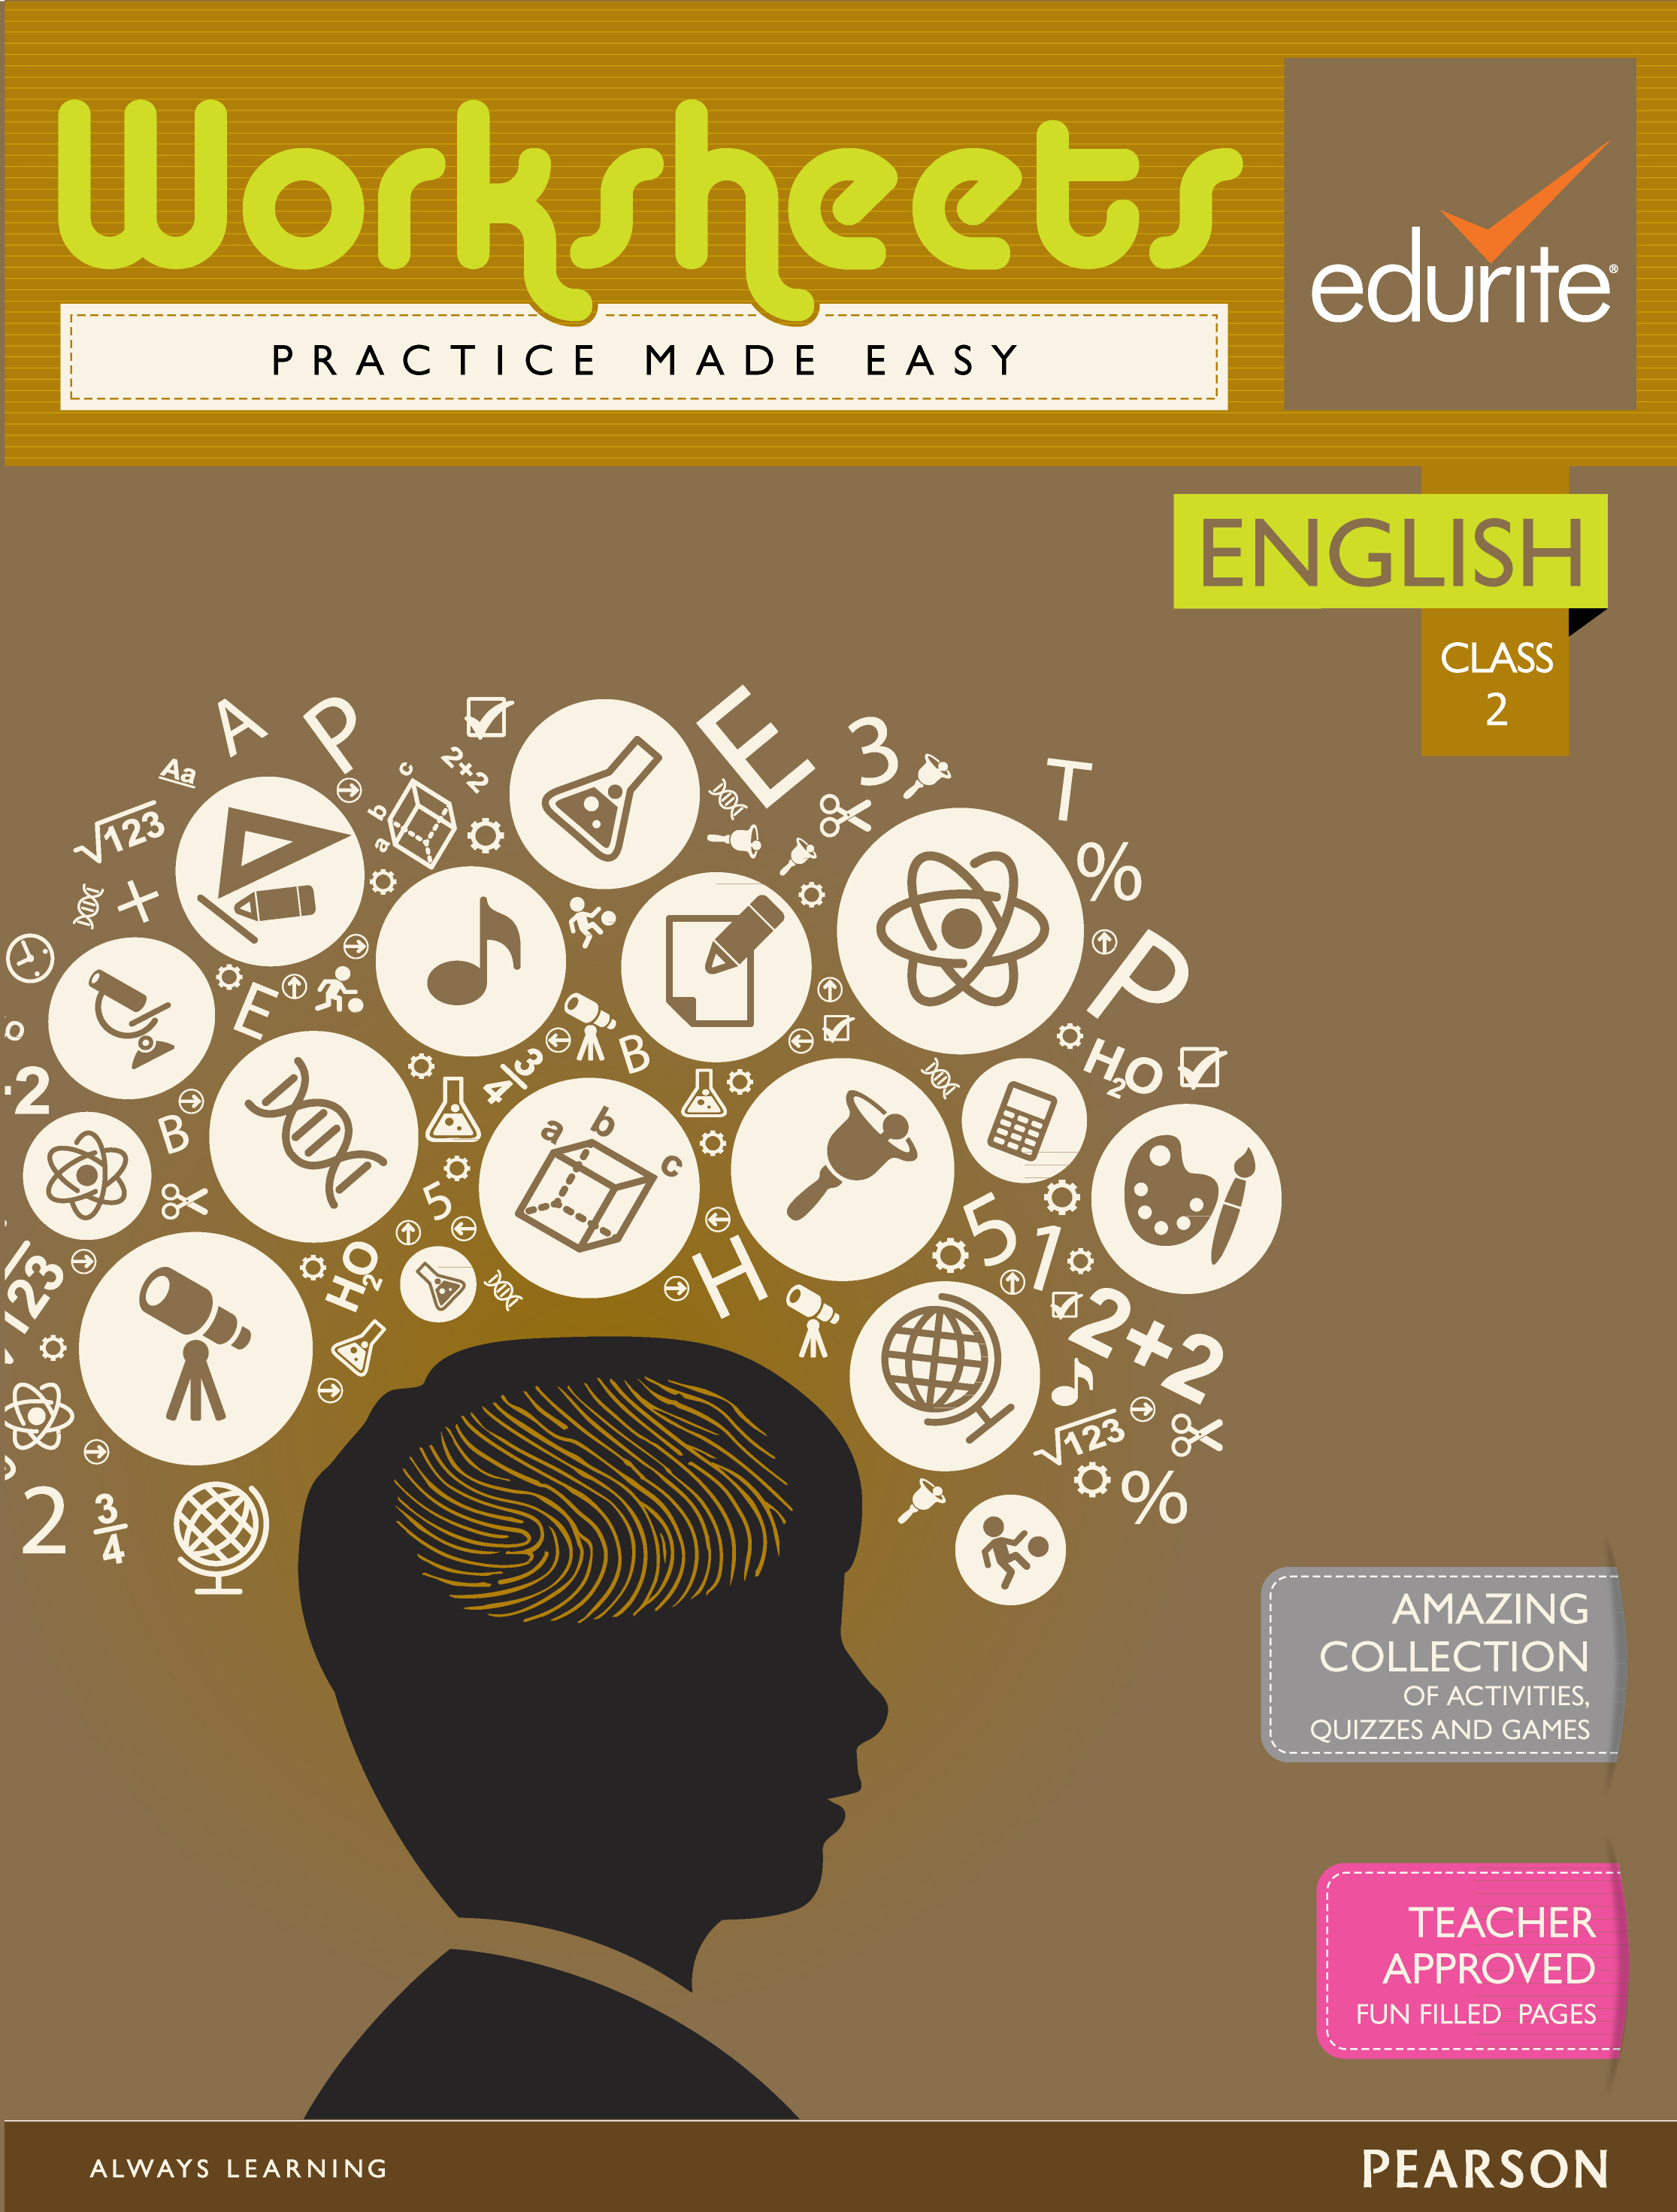 buy-edurite-class-2-english-worksheets-book-edurite-6666000579-6666666000575-sapnaonline